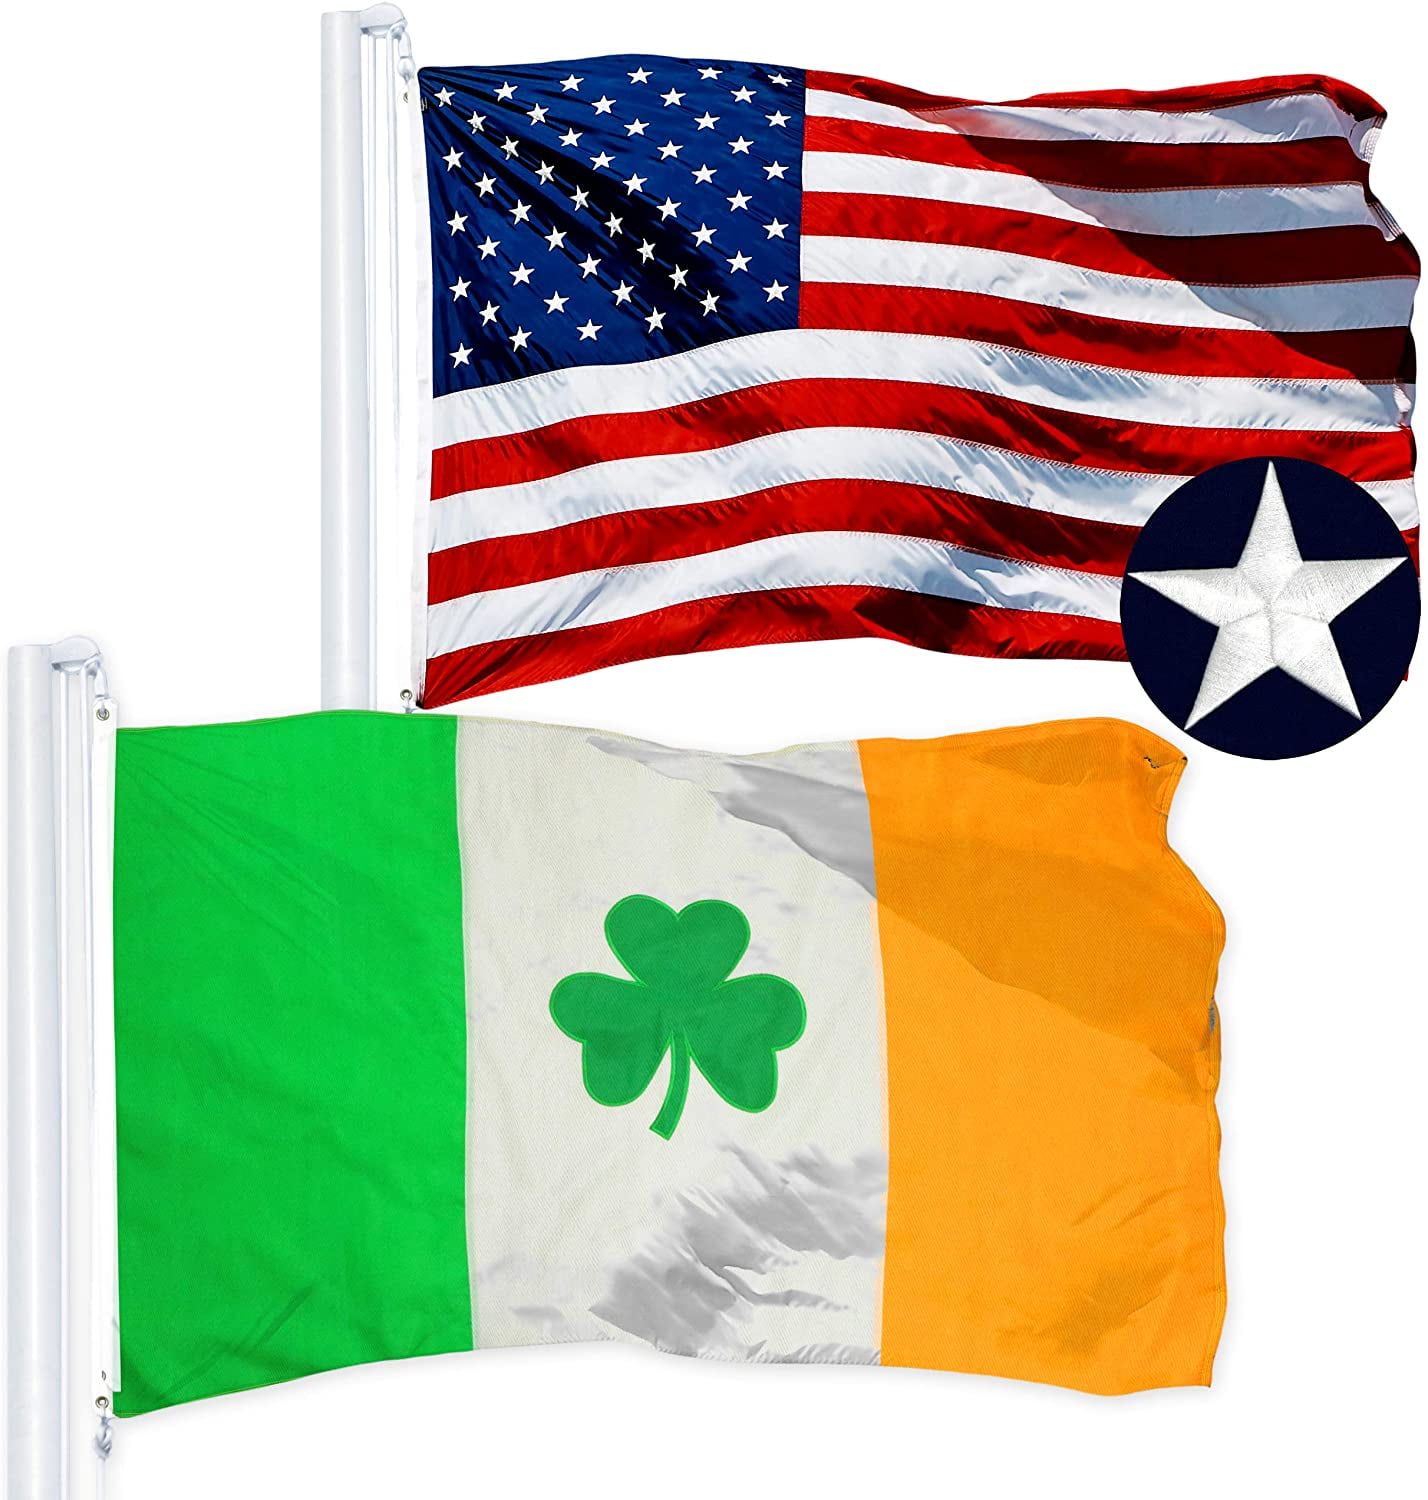 10 NEW IRELAND FLAGS 3' X 5' EIRE ERIN IRISH PRIDE BANNER REPUBLIC OF IRELAND 